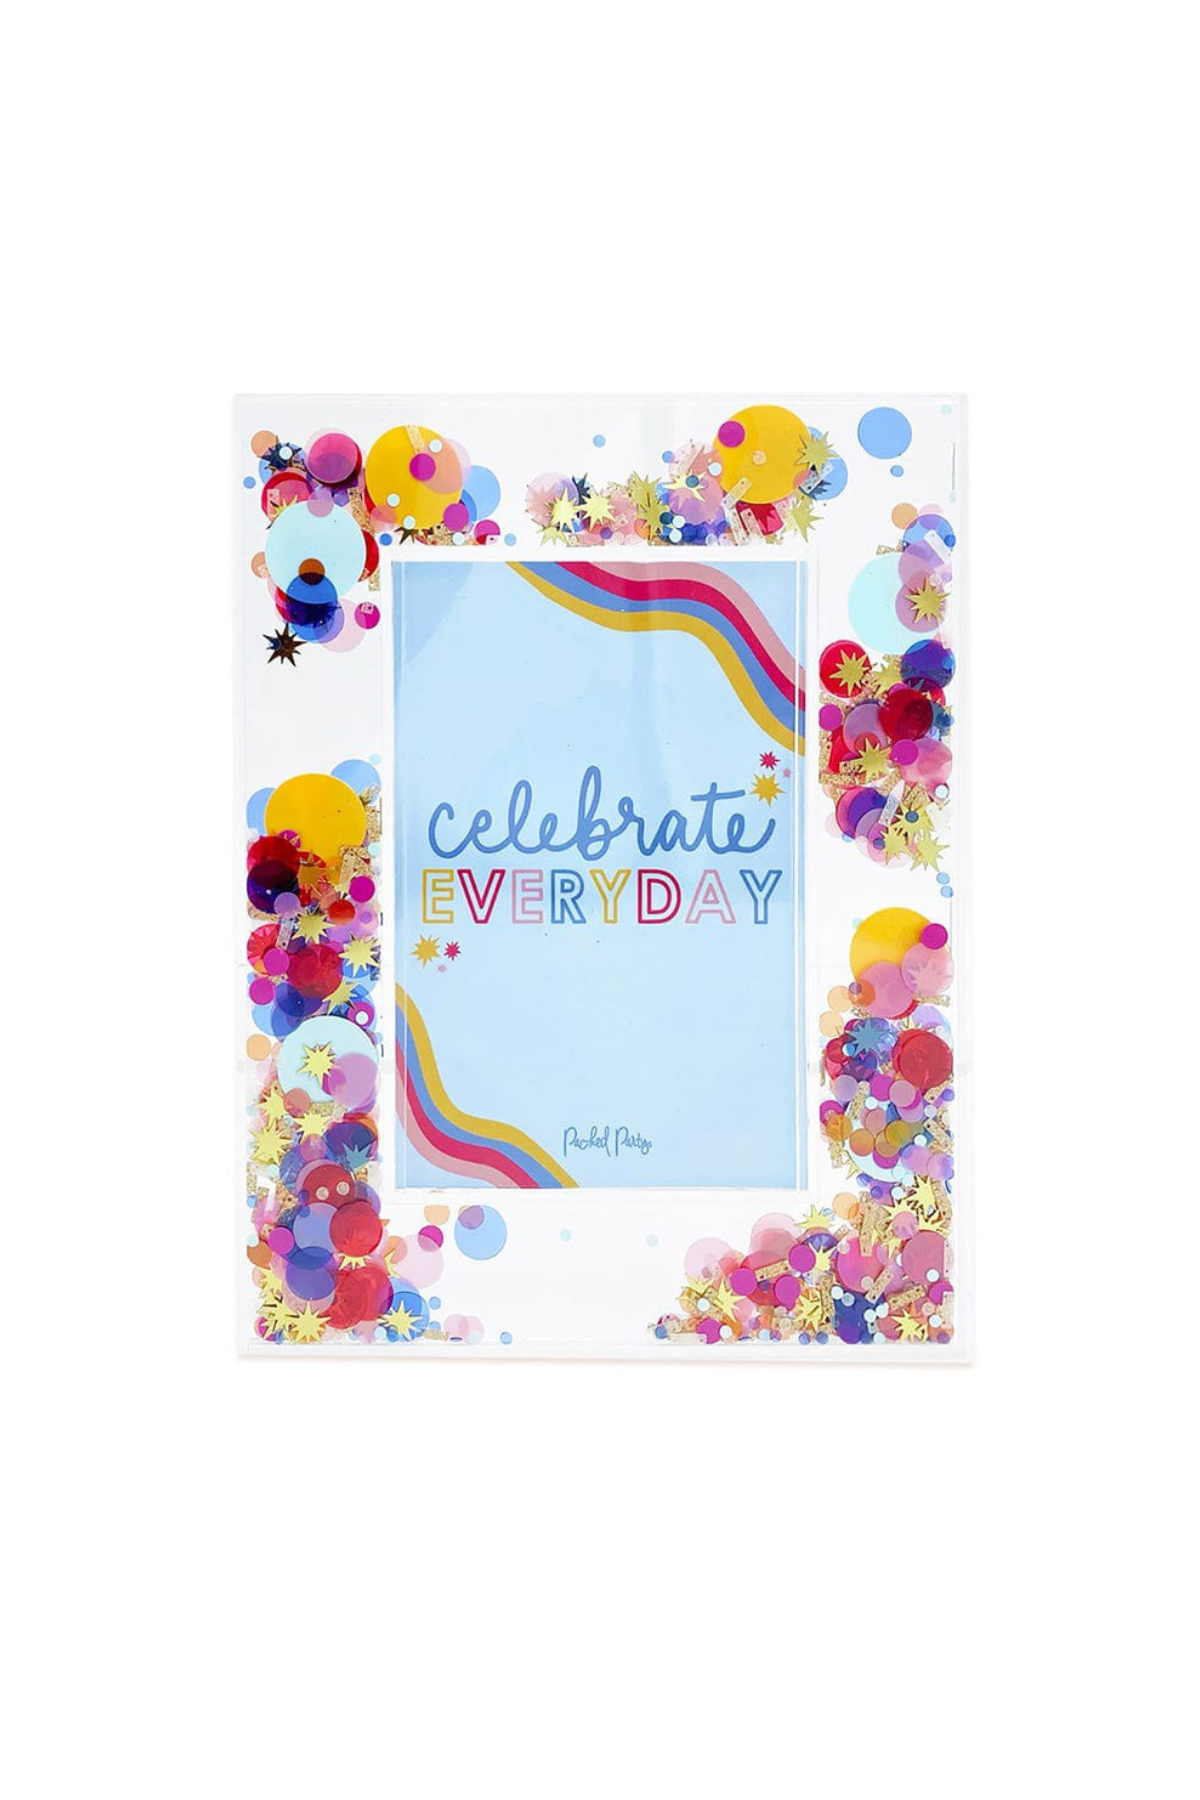 Celebrate Everyday Confetti Frame